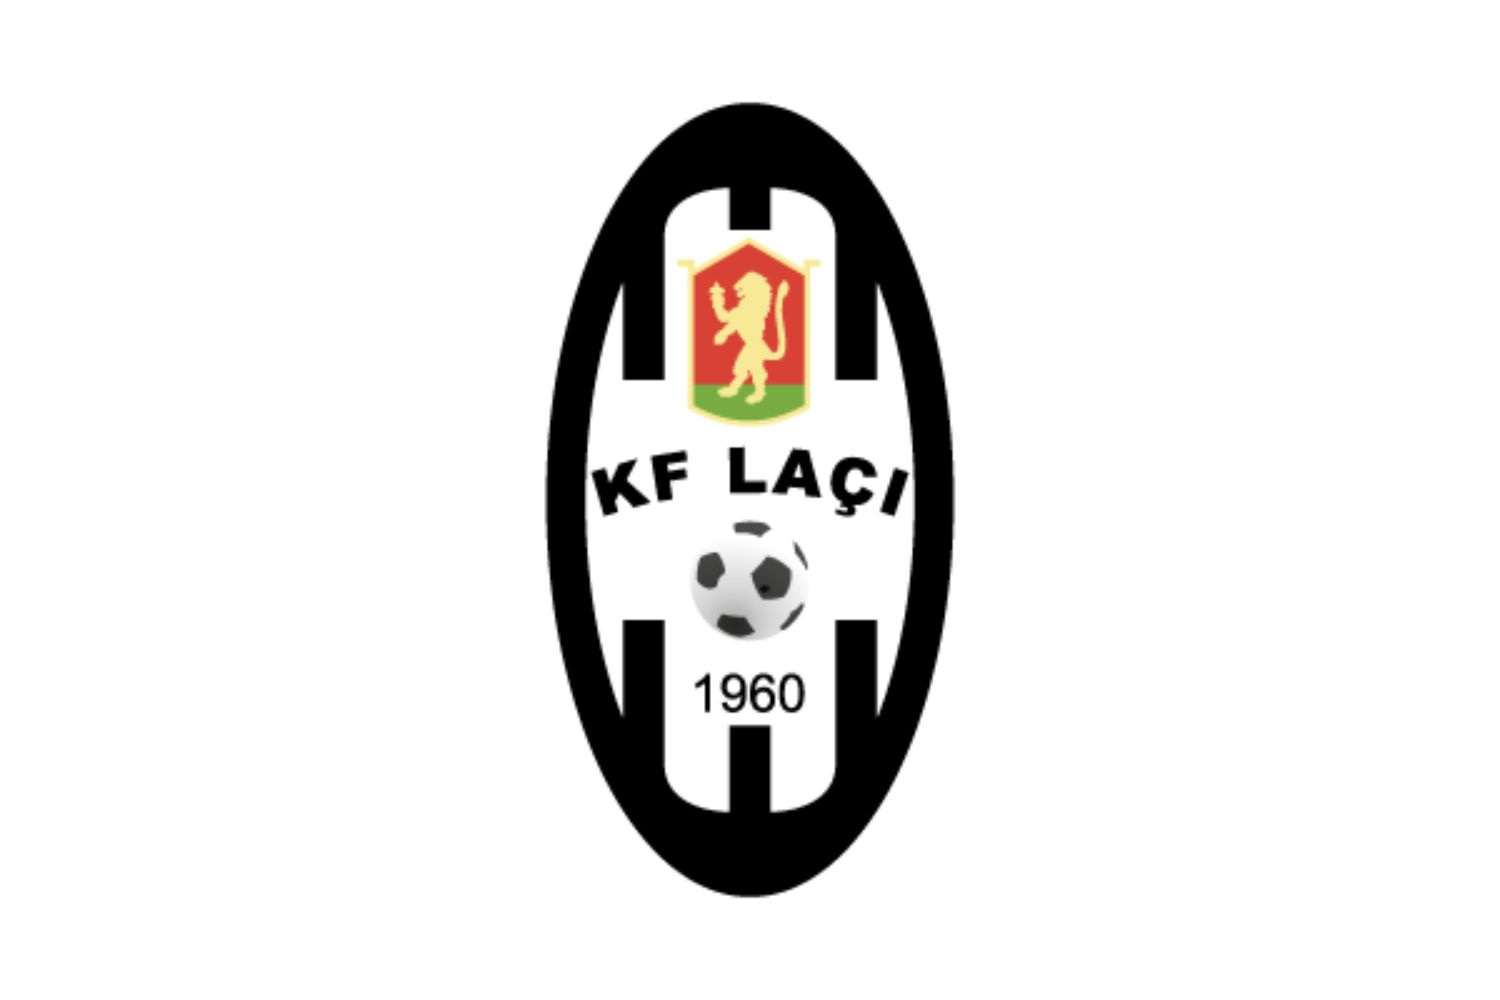 kf-laci-15-football-club-facts